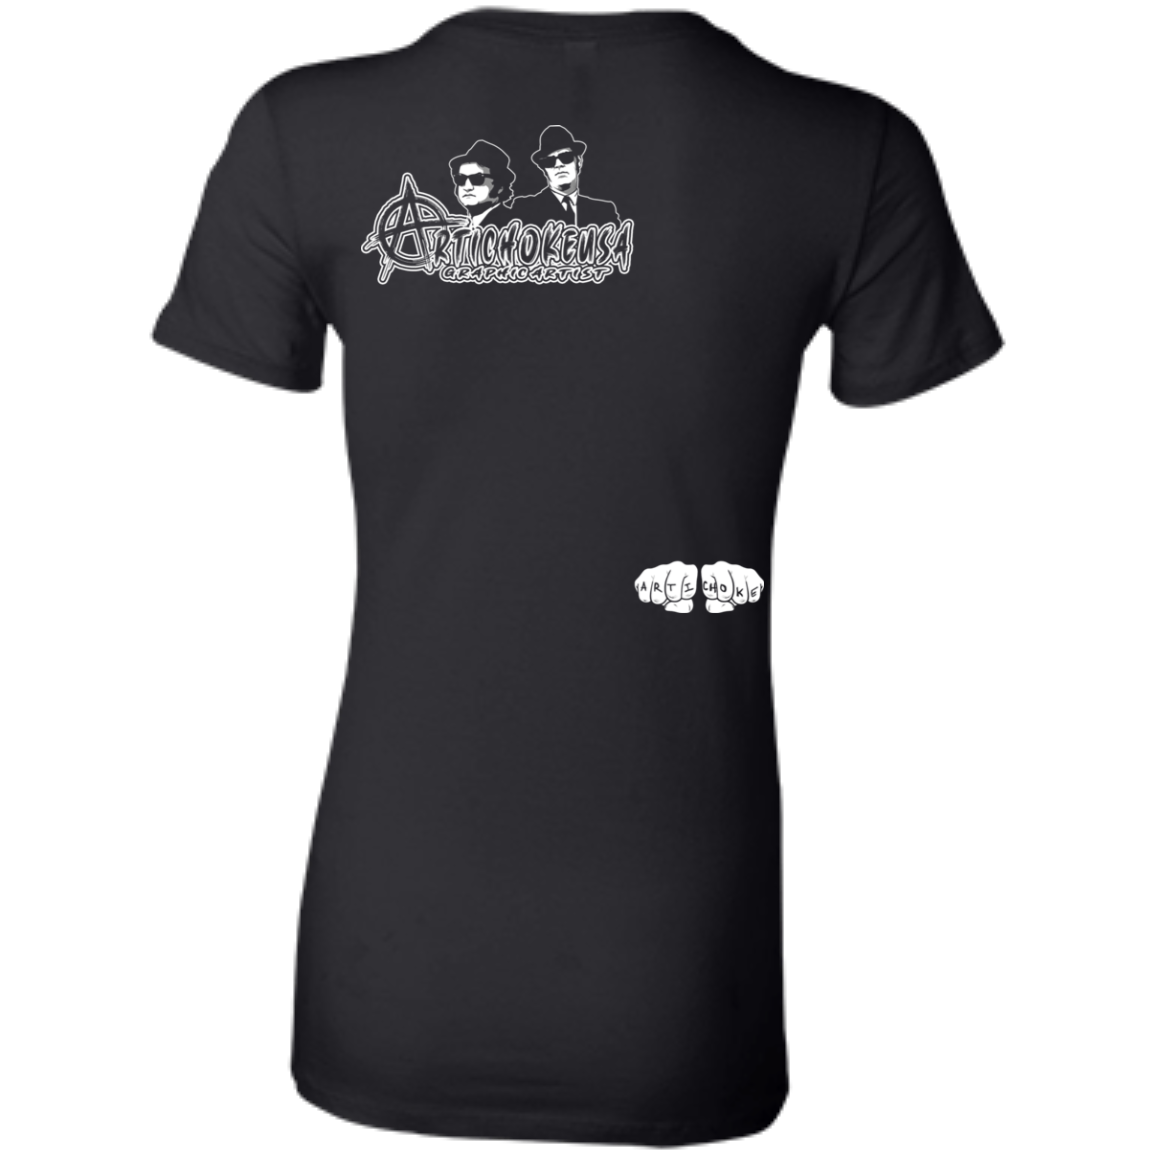 ArtichokeUSA Custom Design. The Good Ole Boys. Blues Brothers Fan Art. Ladies' Favorite T-Shirt